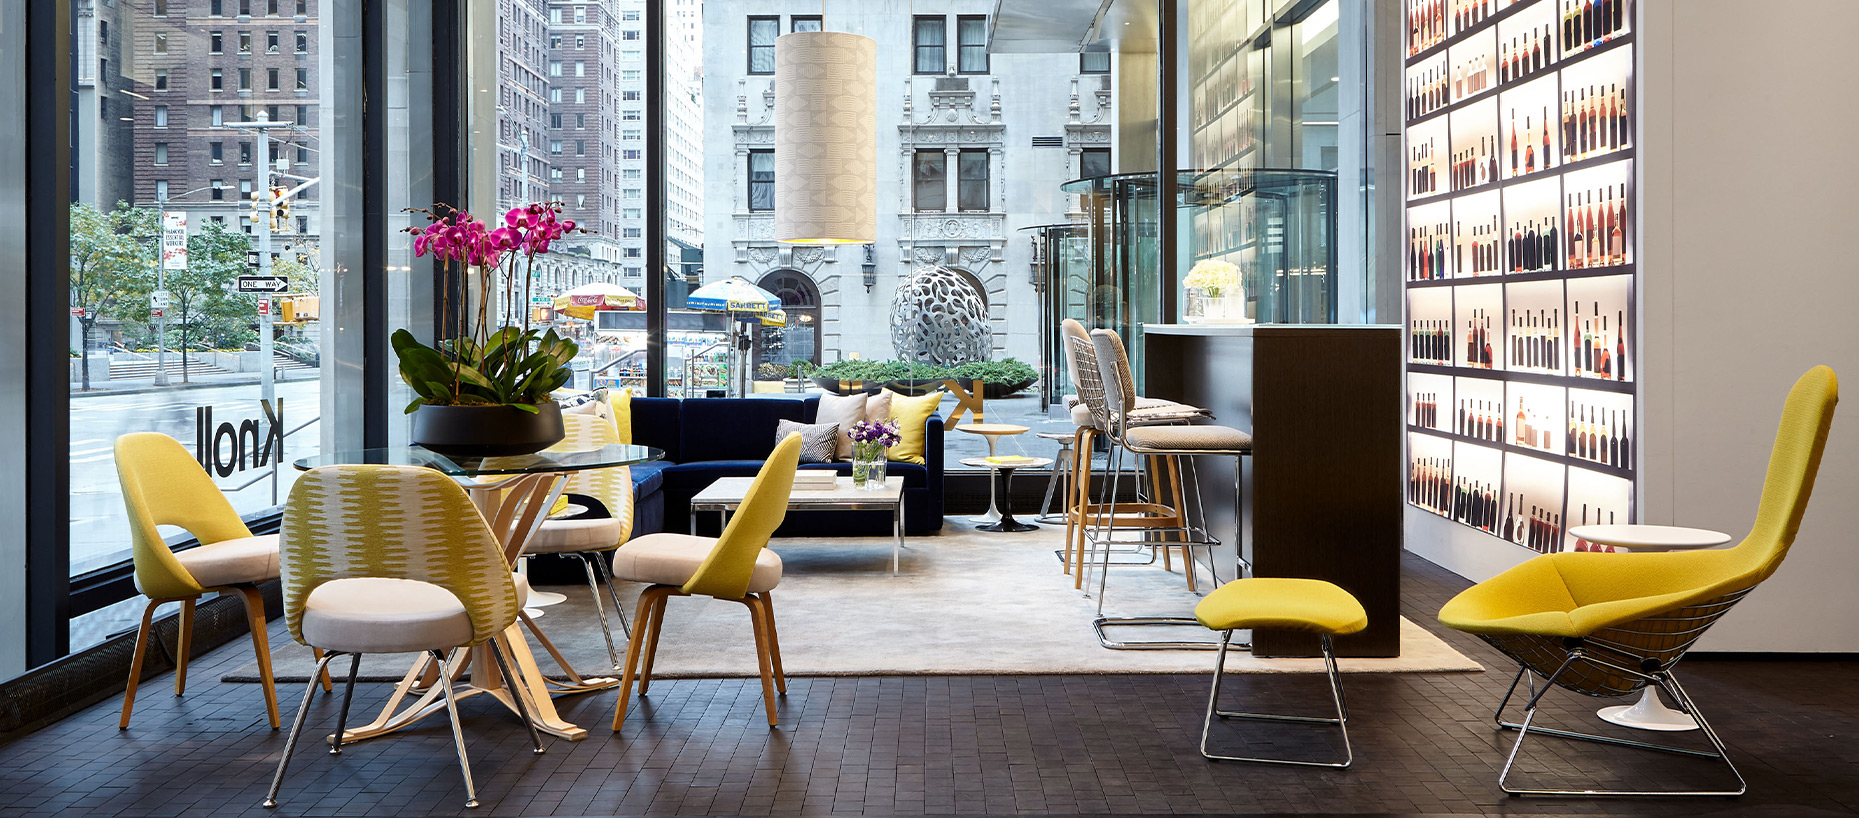 New York Home Design Shop Image